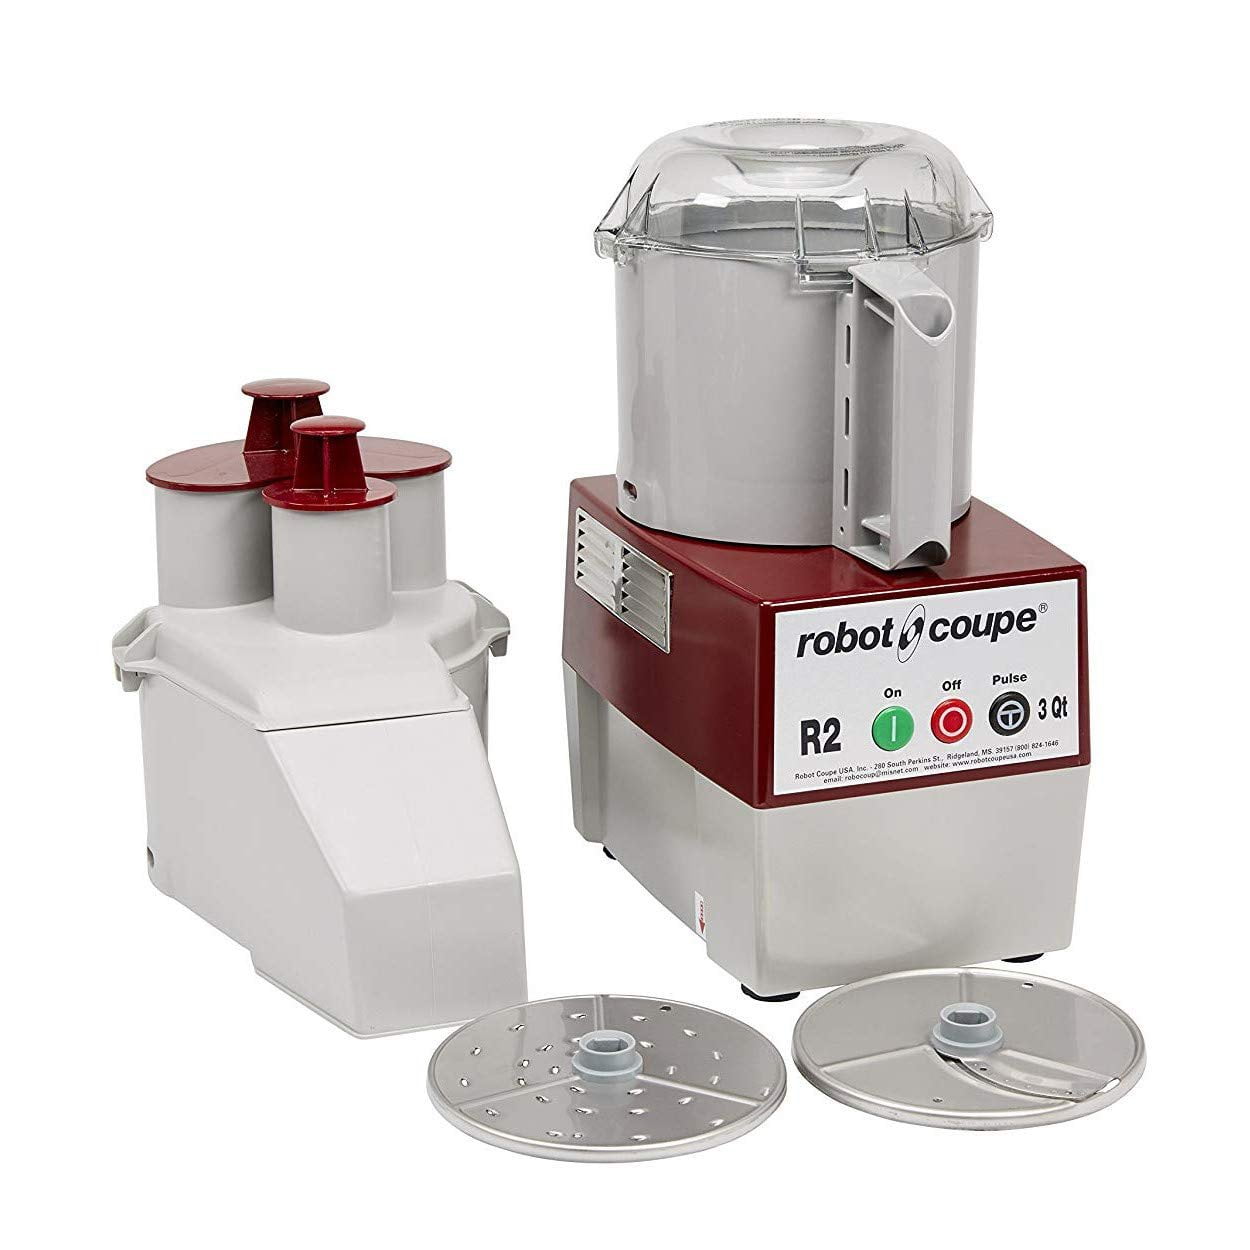 Drik vand væske Installere Robot Coupe - R2N - 3 L 1 HP Continuous Feed Food Processor - Walmart.com